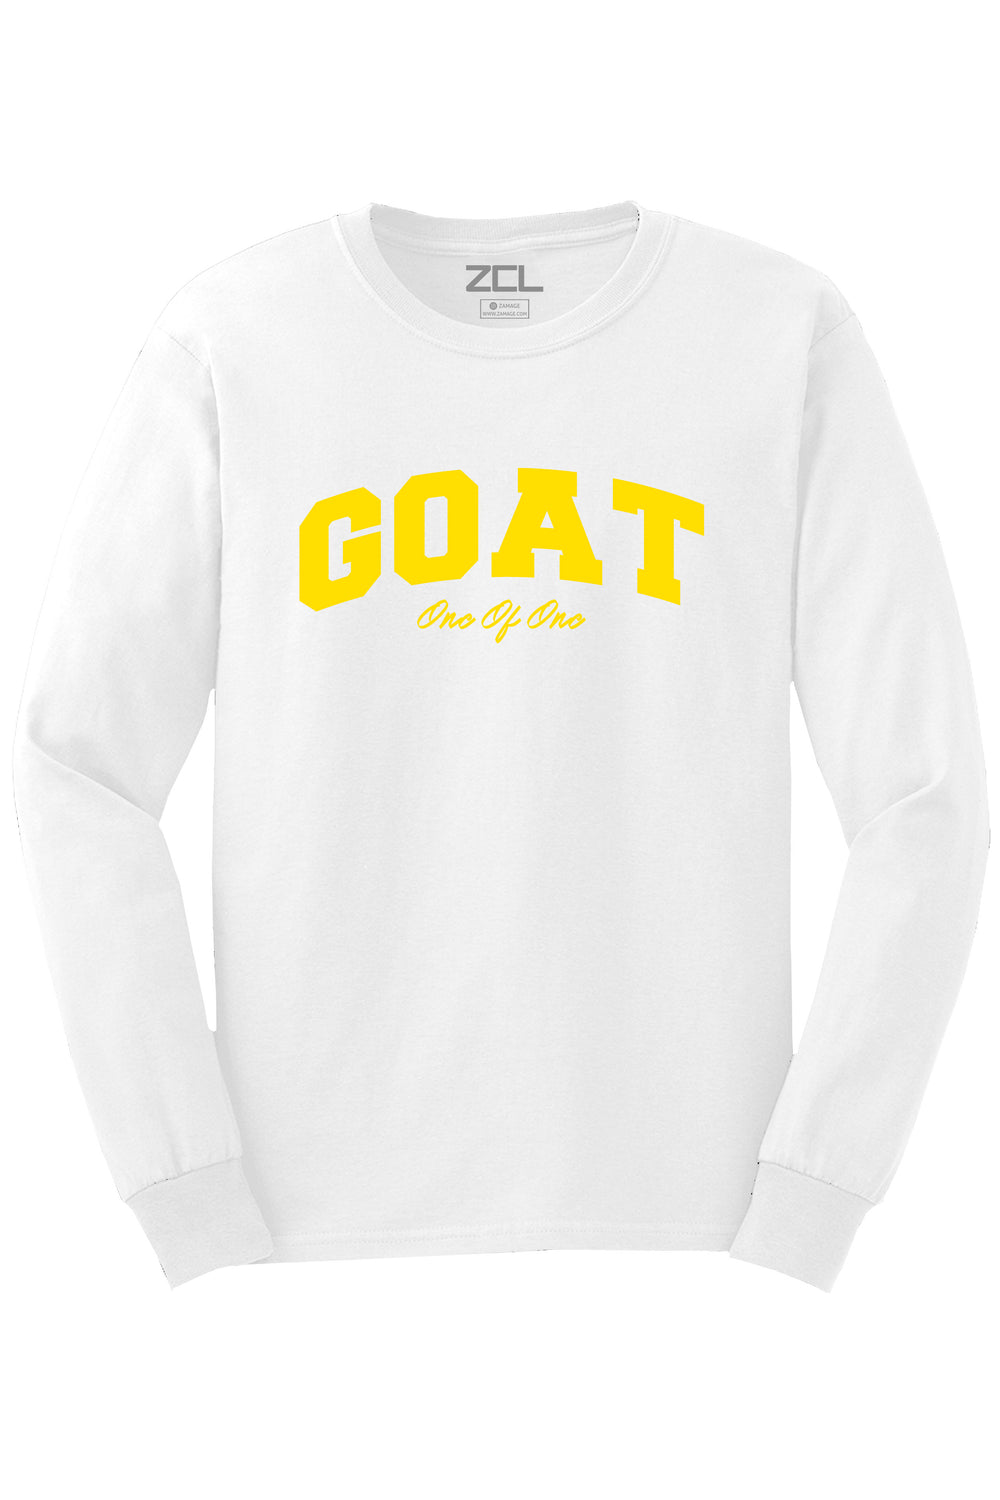 Goat Long Sleeve Tee (Yellow Logo) - Zamage